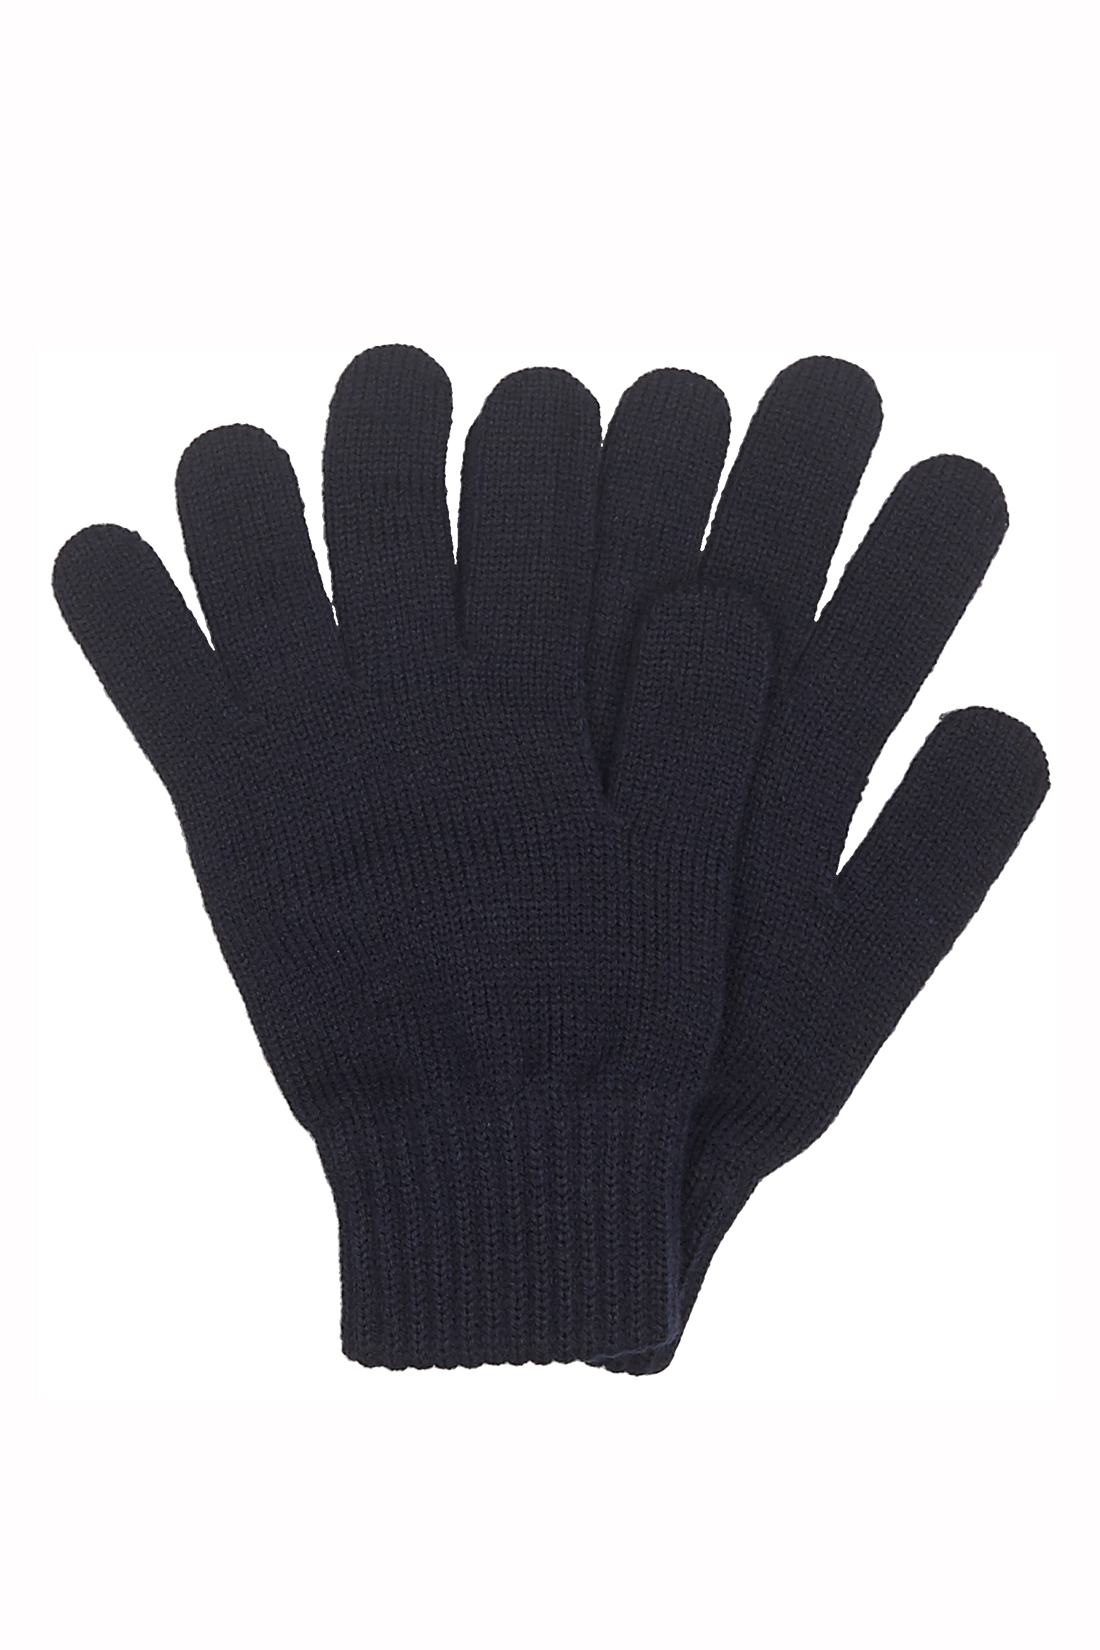 Полушерстяные перчатки (арт. baon B868504), размер Без/раз, цвет синий Полушерстяные перчатки (арт. baon B868504) - фото 1